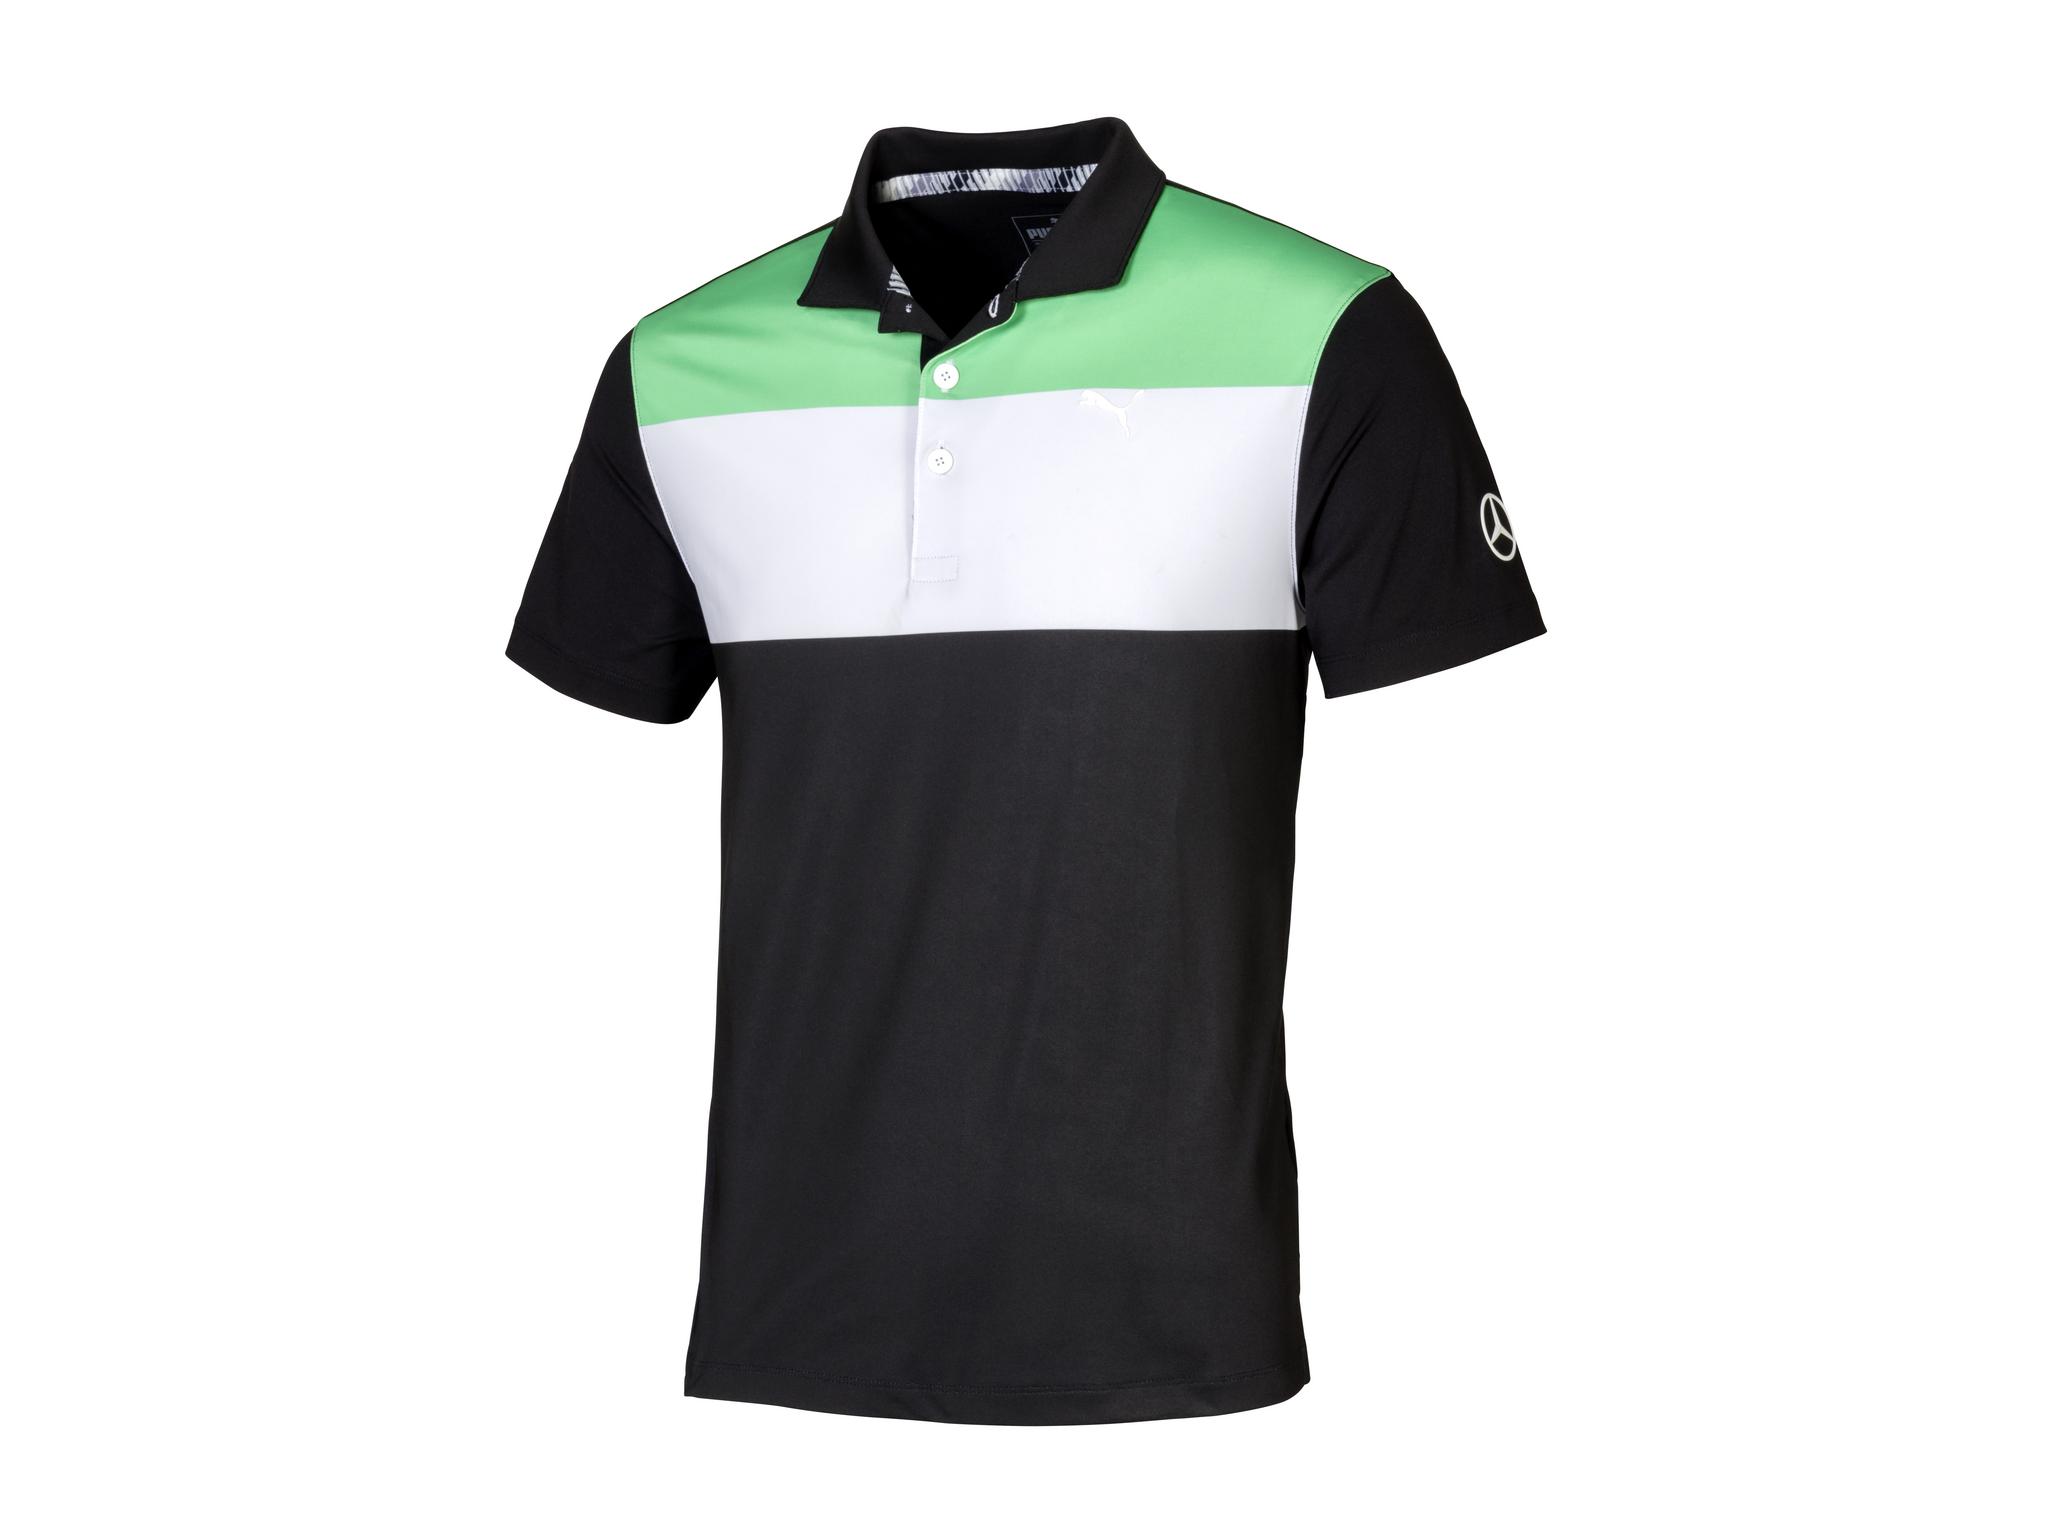 Golf-Poloshirt Kinder - grün / schwarz / weiß, 164, PUMA